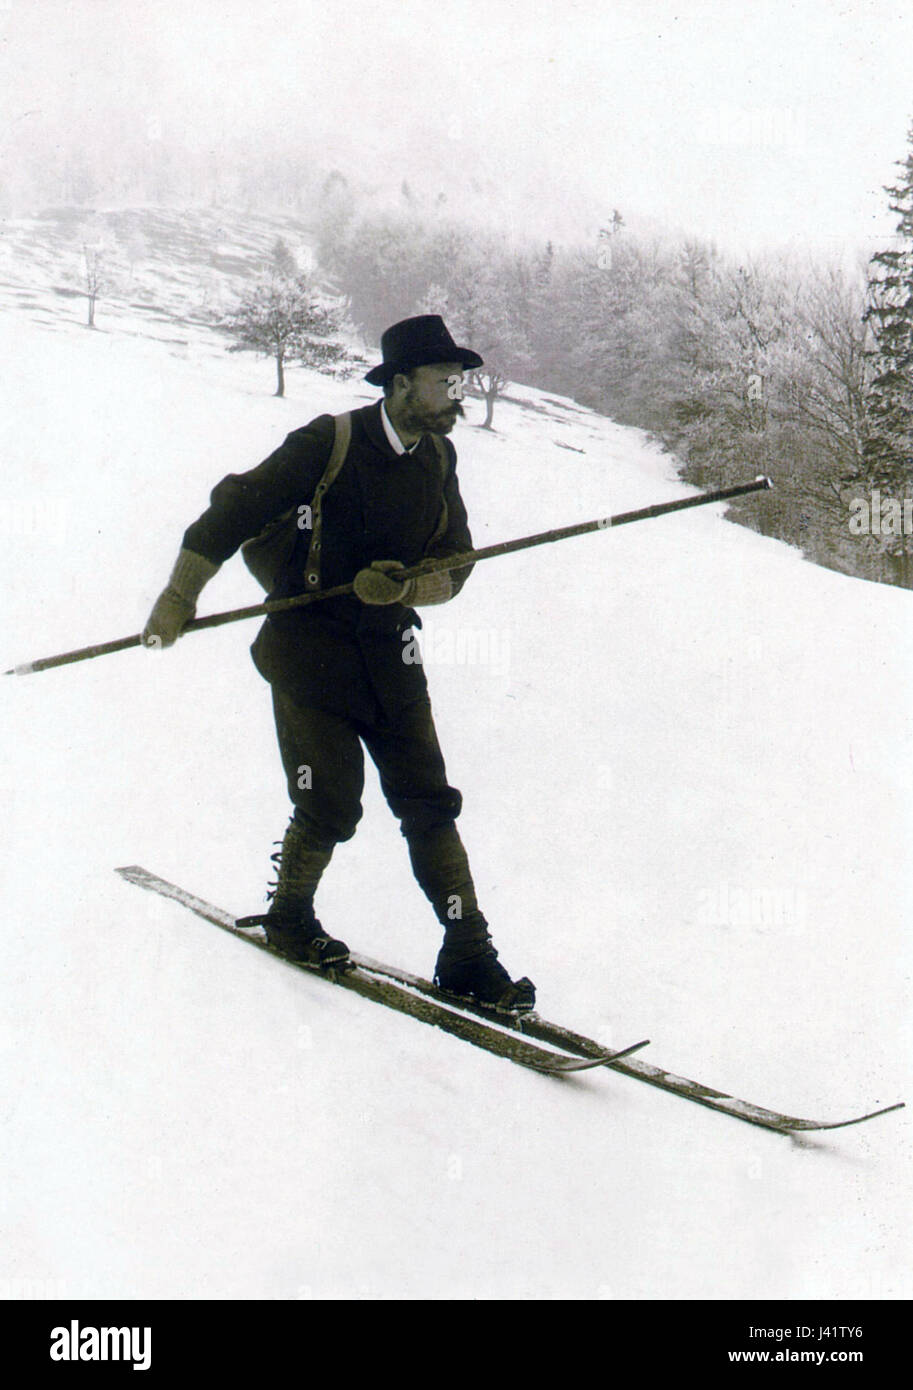 Mathias zdarsky ski technique Stock Photo